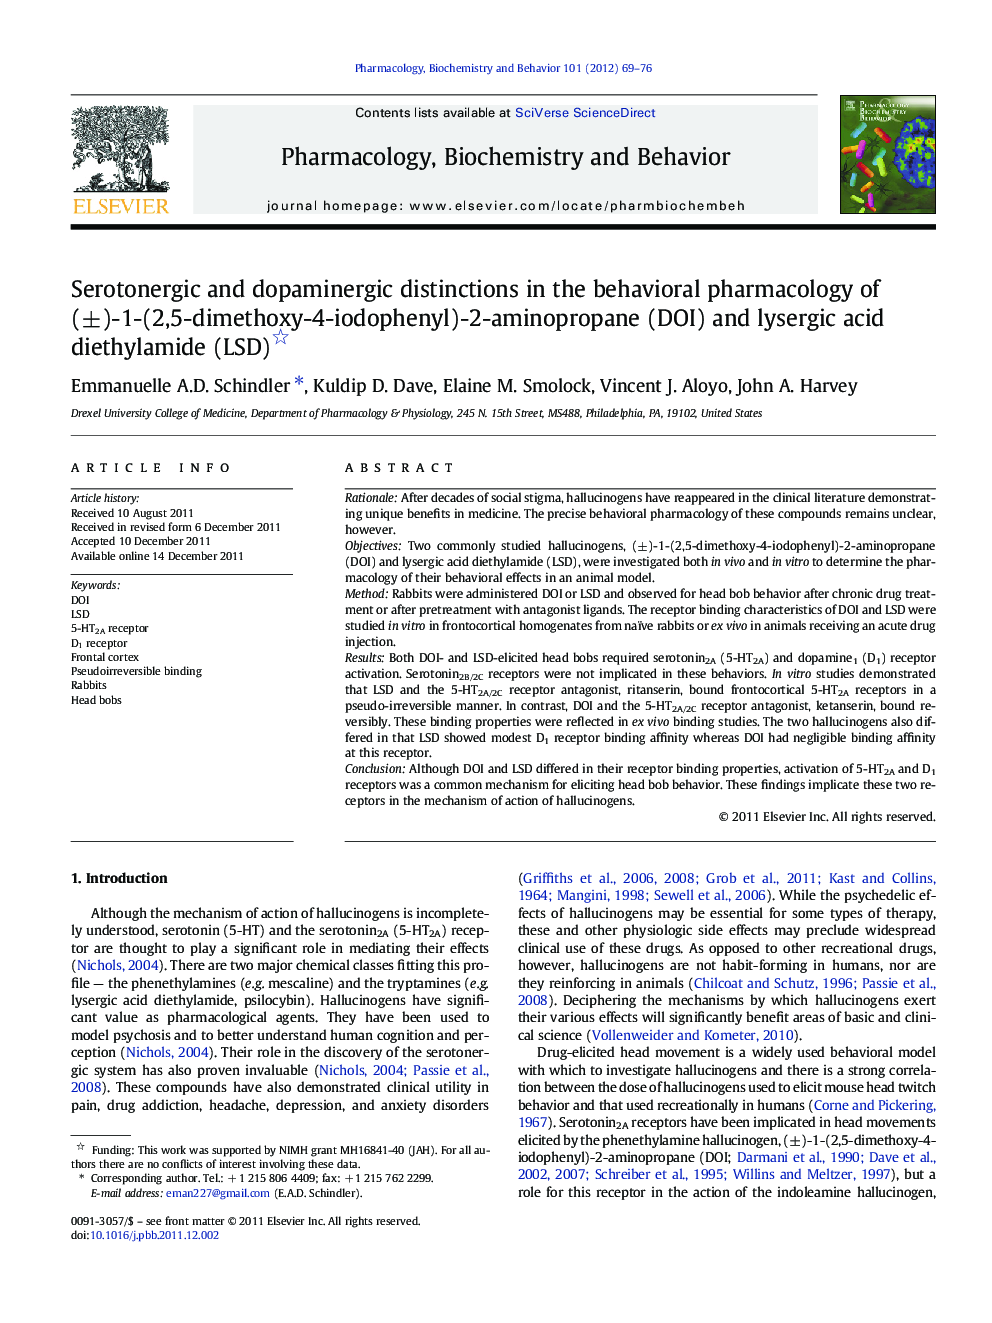 Serotonergic and dopaminergic distinctions in the behavioral pharmacology of (Â±)-1-(2,5-dimethoxy-4-iodophenyl)-2-aminopropane (DOI) and lysergic acid diethylamide (LSD)